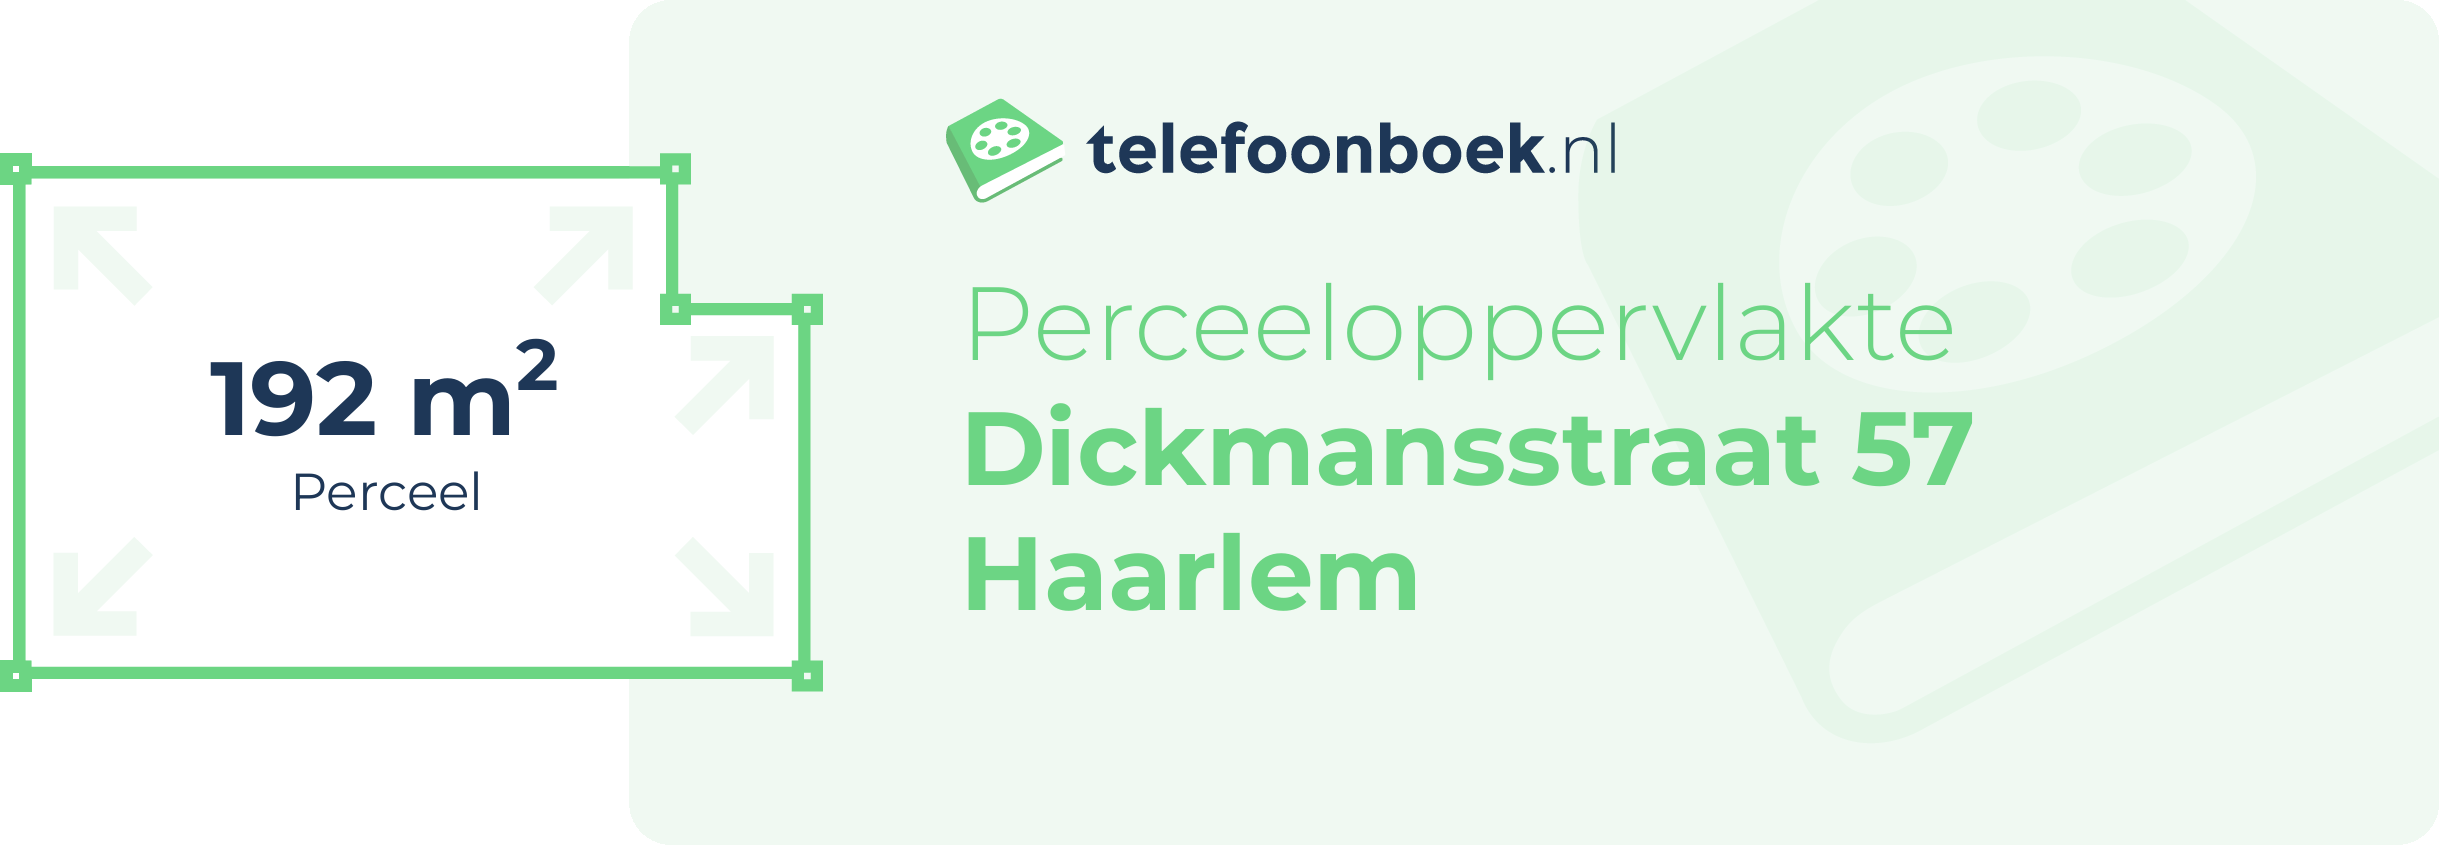 Perceeloppervlakte Dickmansstraat 57 Haarlem